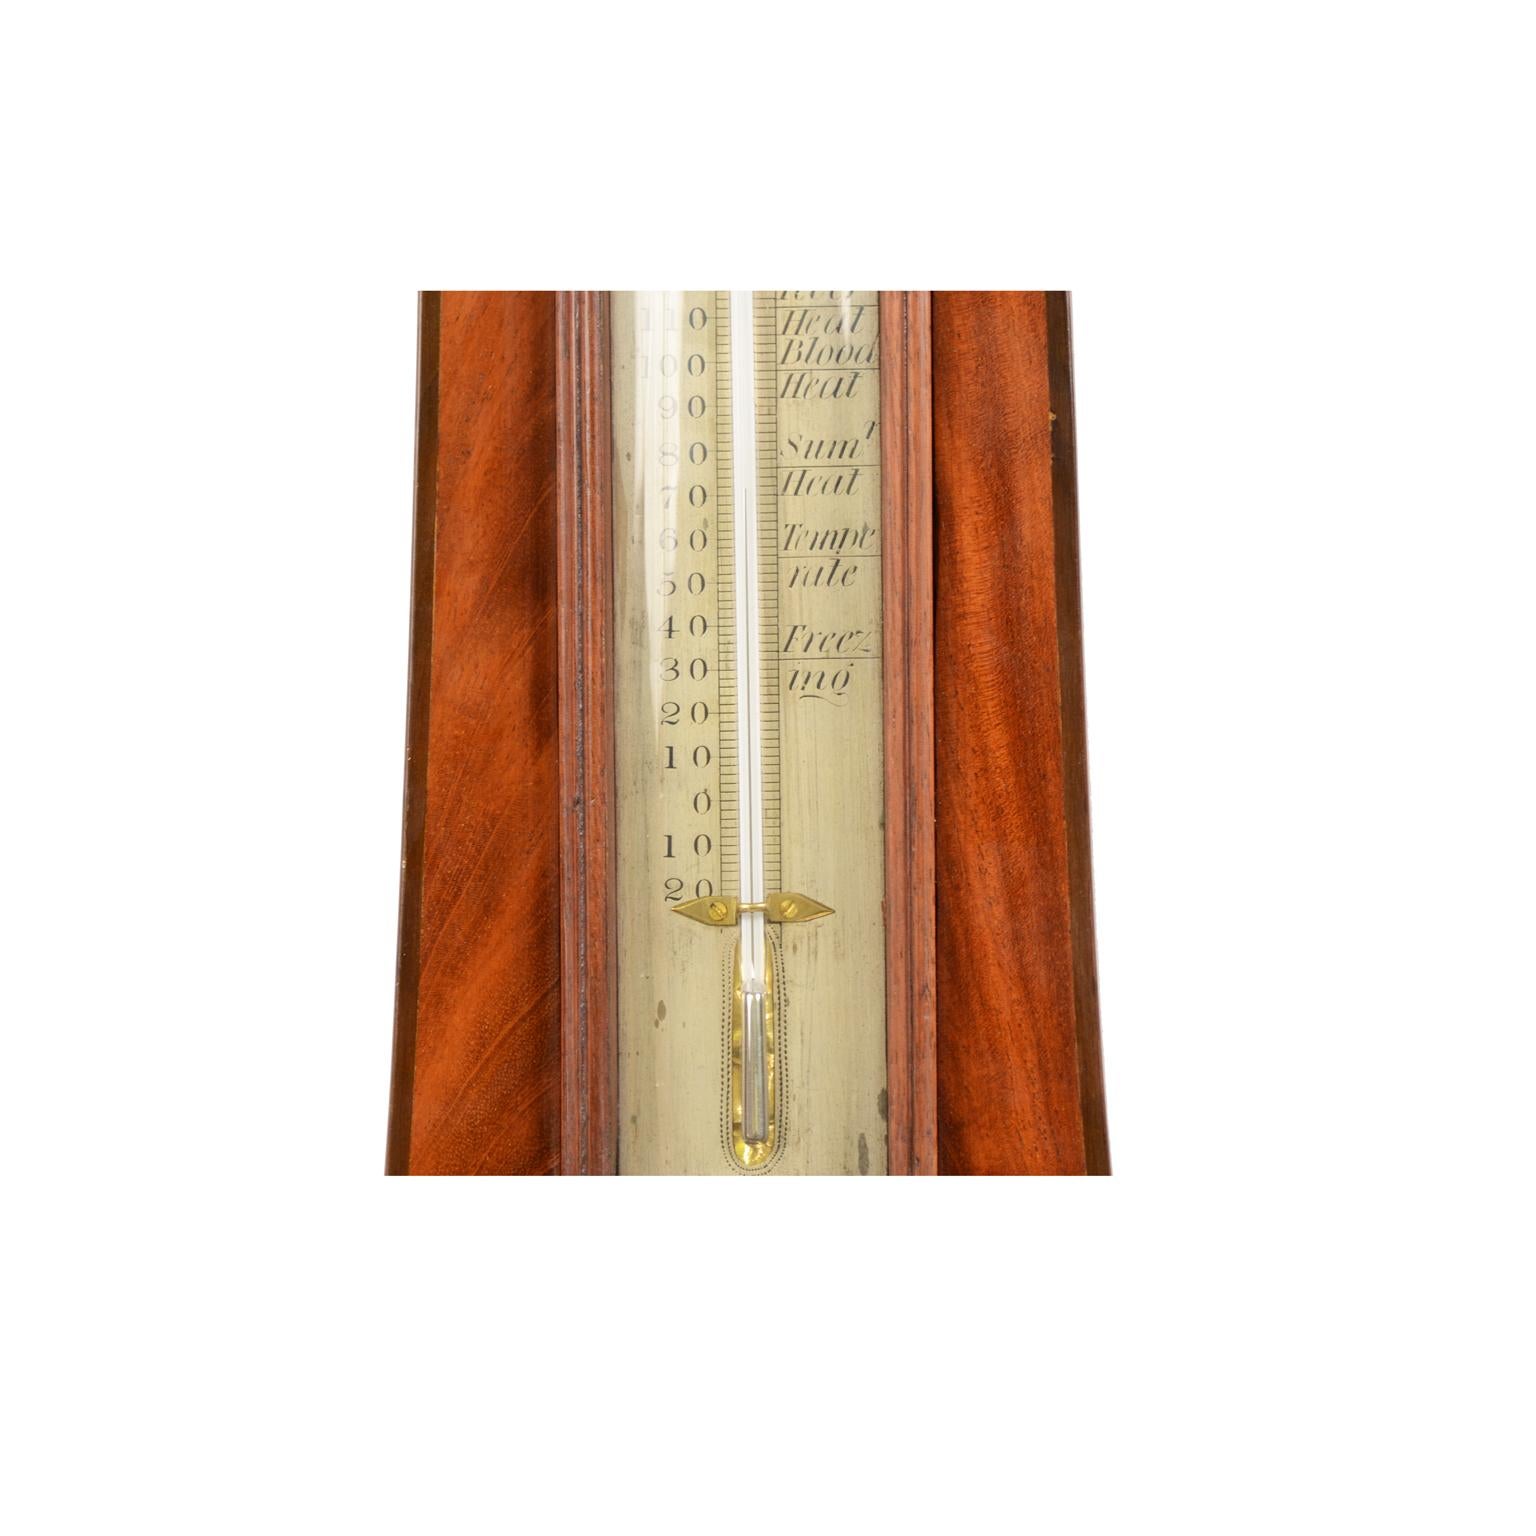 Mahogany Large Clock Barometer Antique Measuring Instrument by Amadio London 1842-1851 